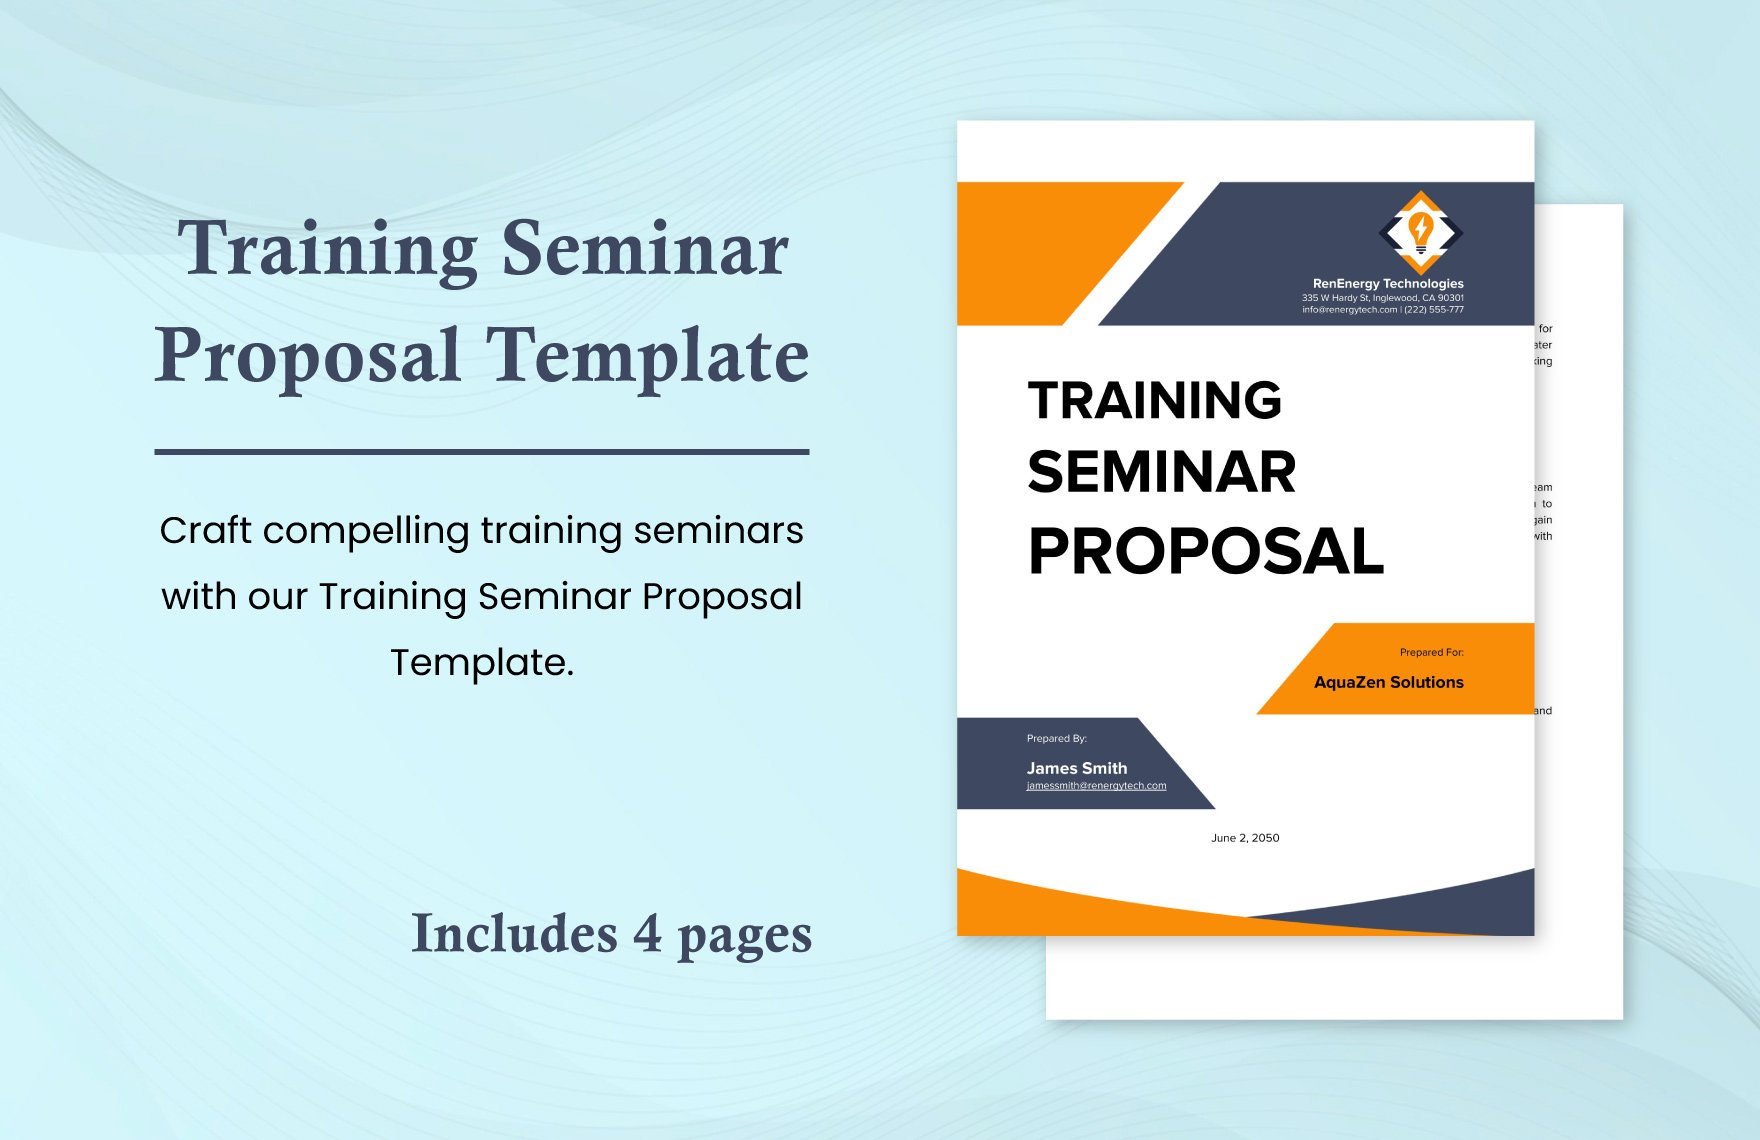 Training Seminar Proposal Template